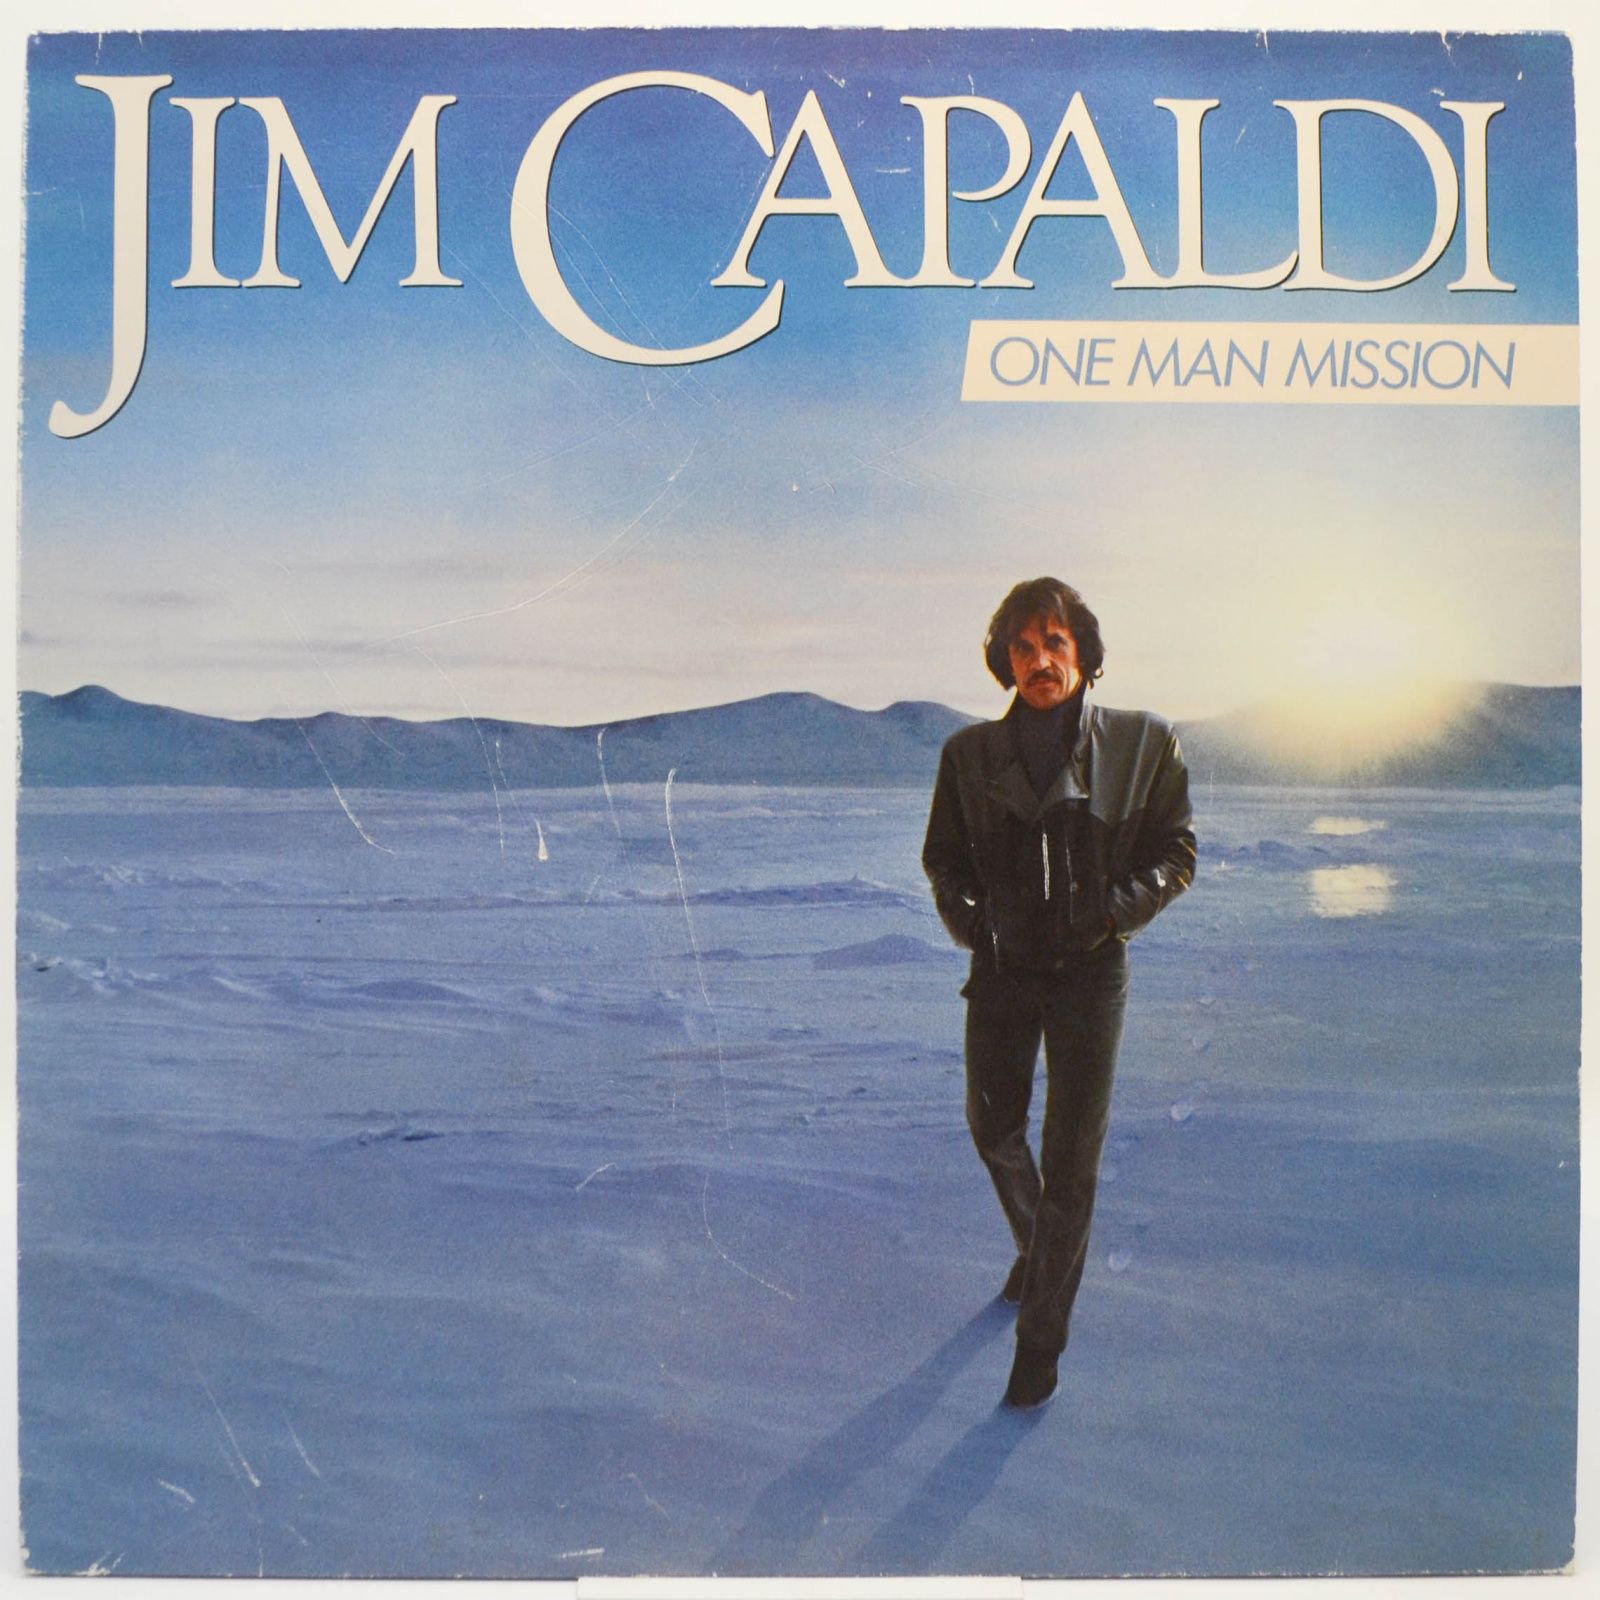 Jim Capaldi — One Man Mission, 1984